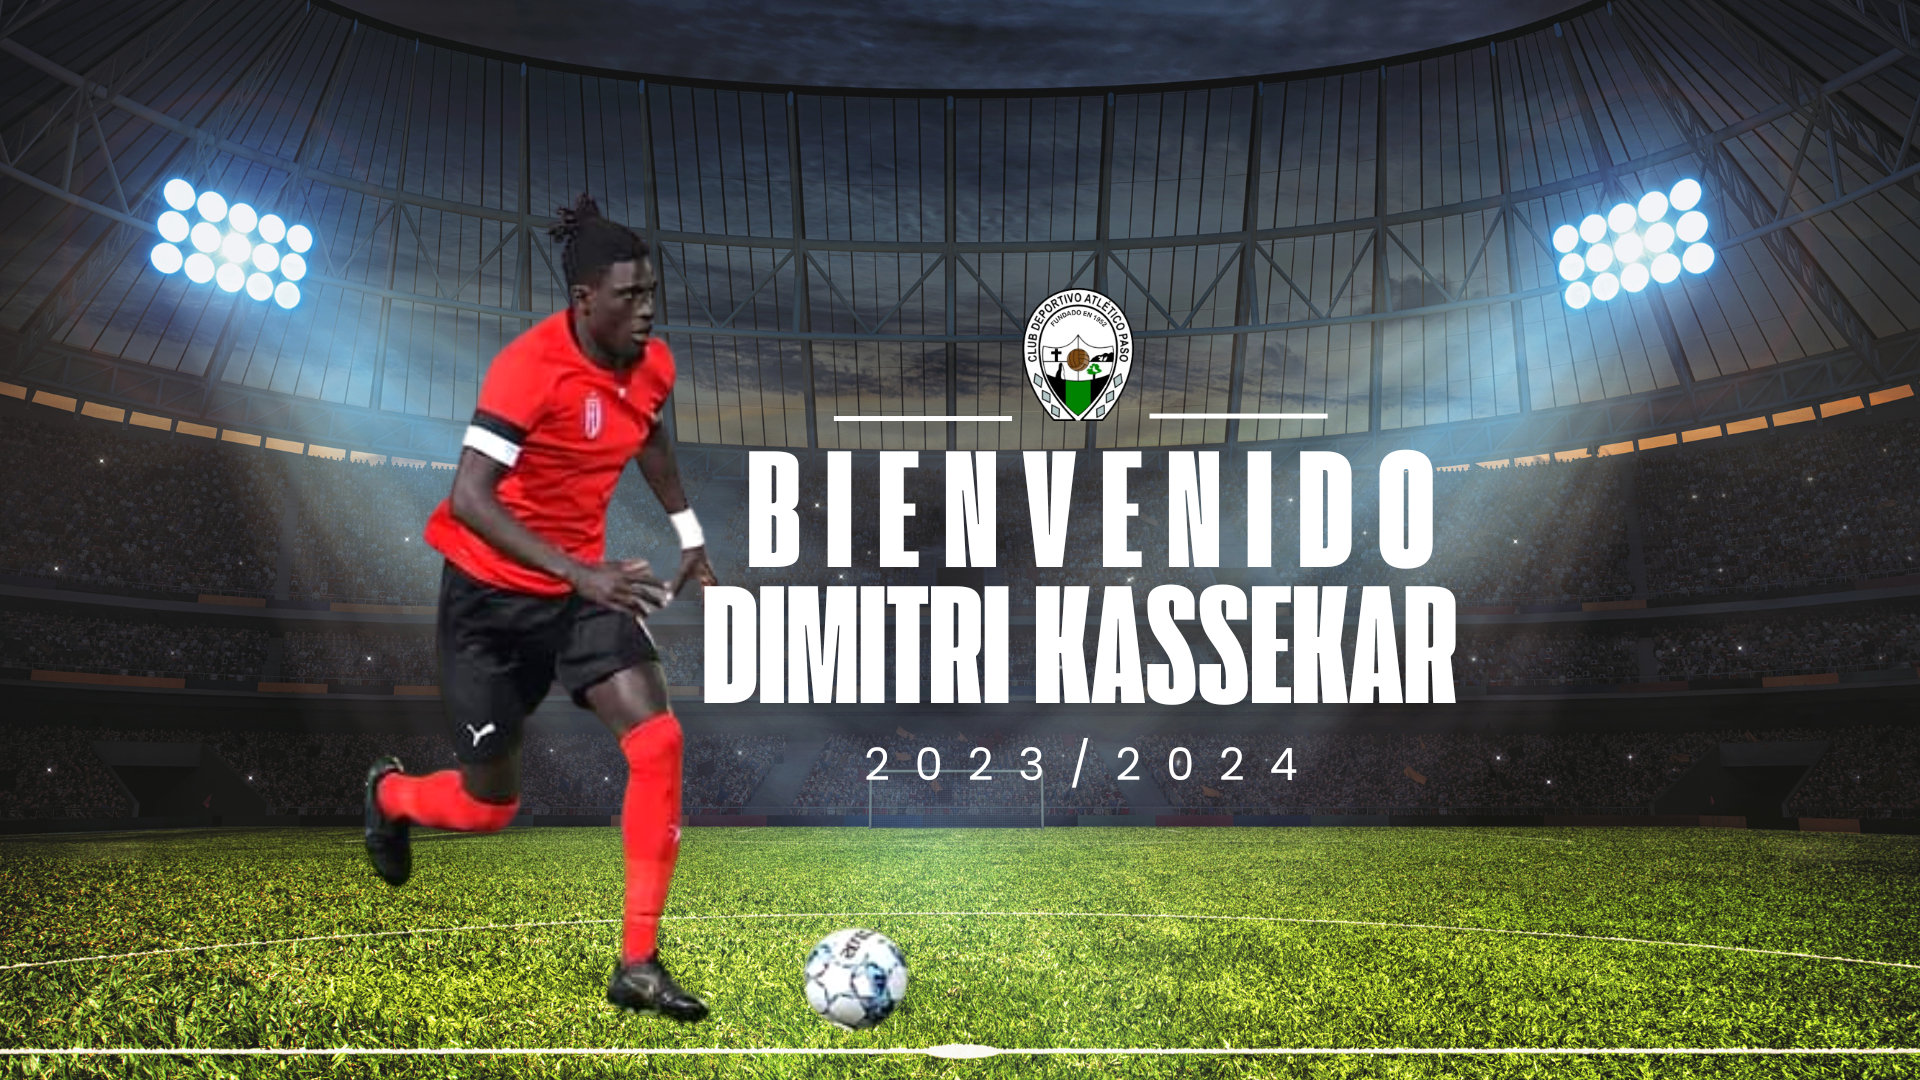 El senegalés Dimitri Kassekar se suma al mediocentro defensivo del Atlético Paso